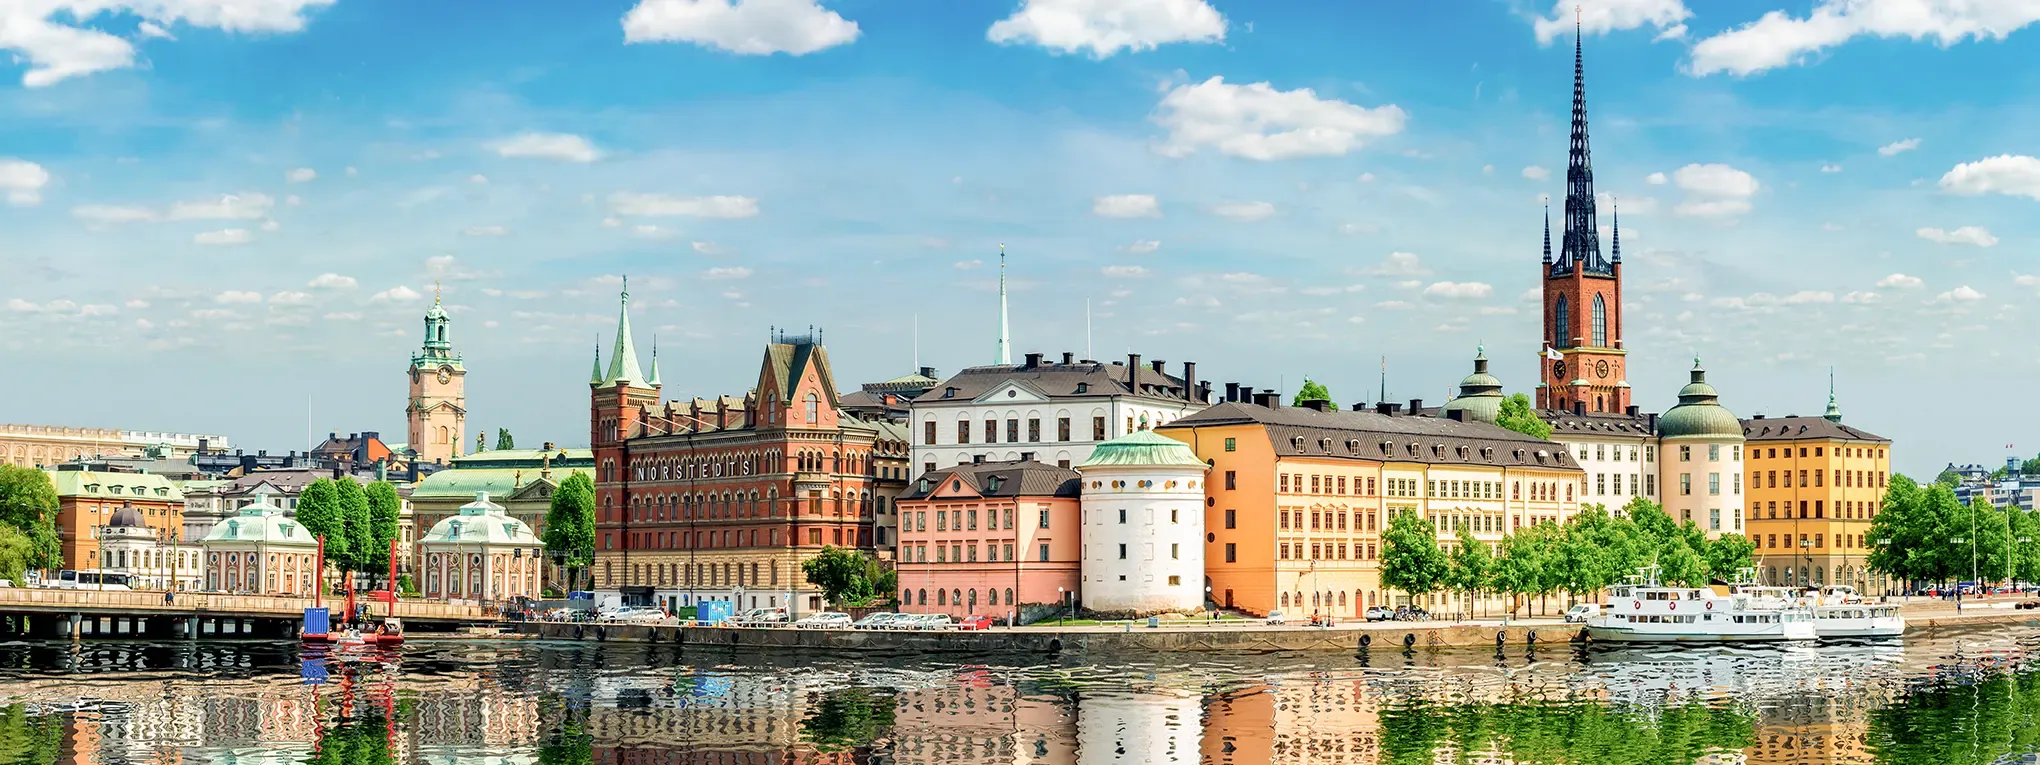 Stockholm gamla stan